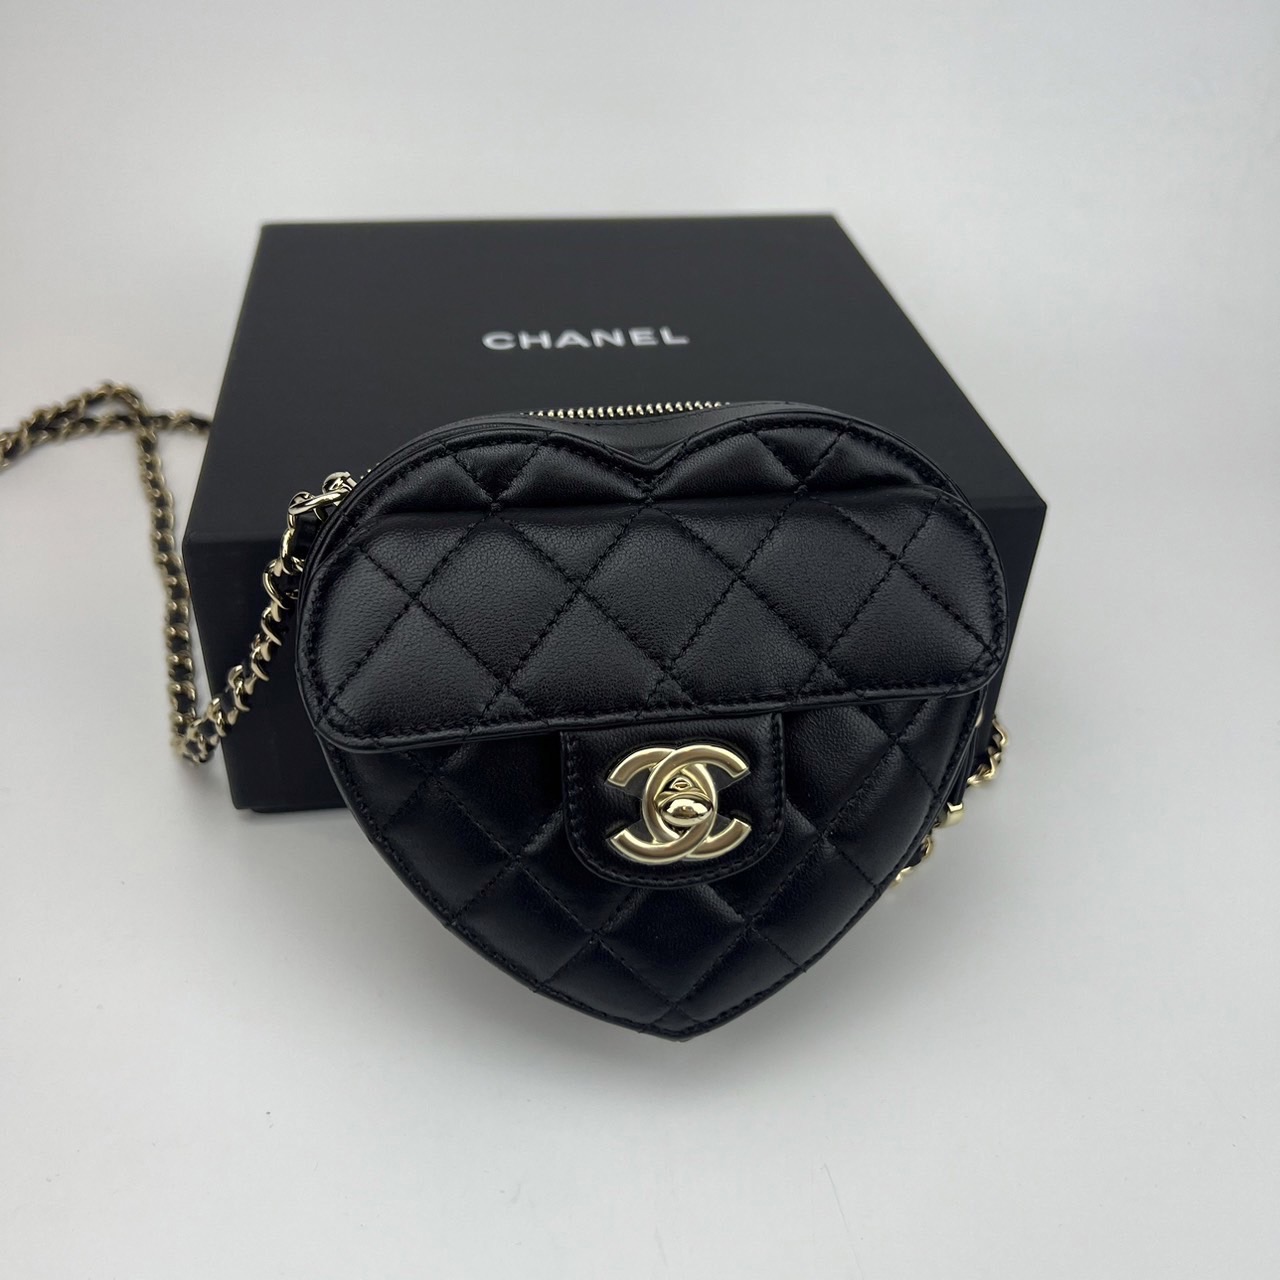 Chanel Heart Small Crossbody Bag